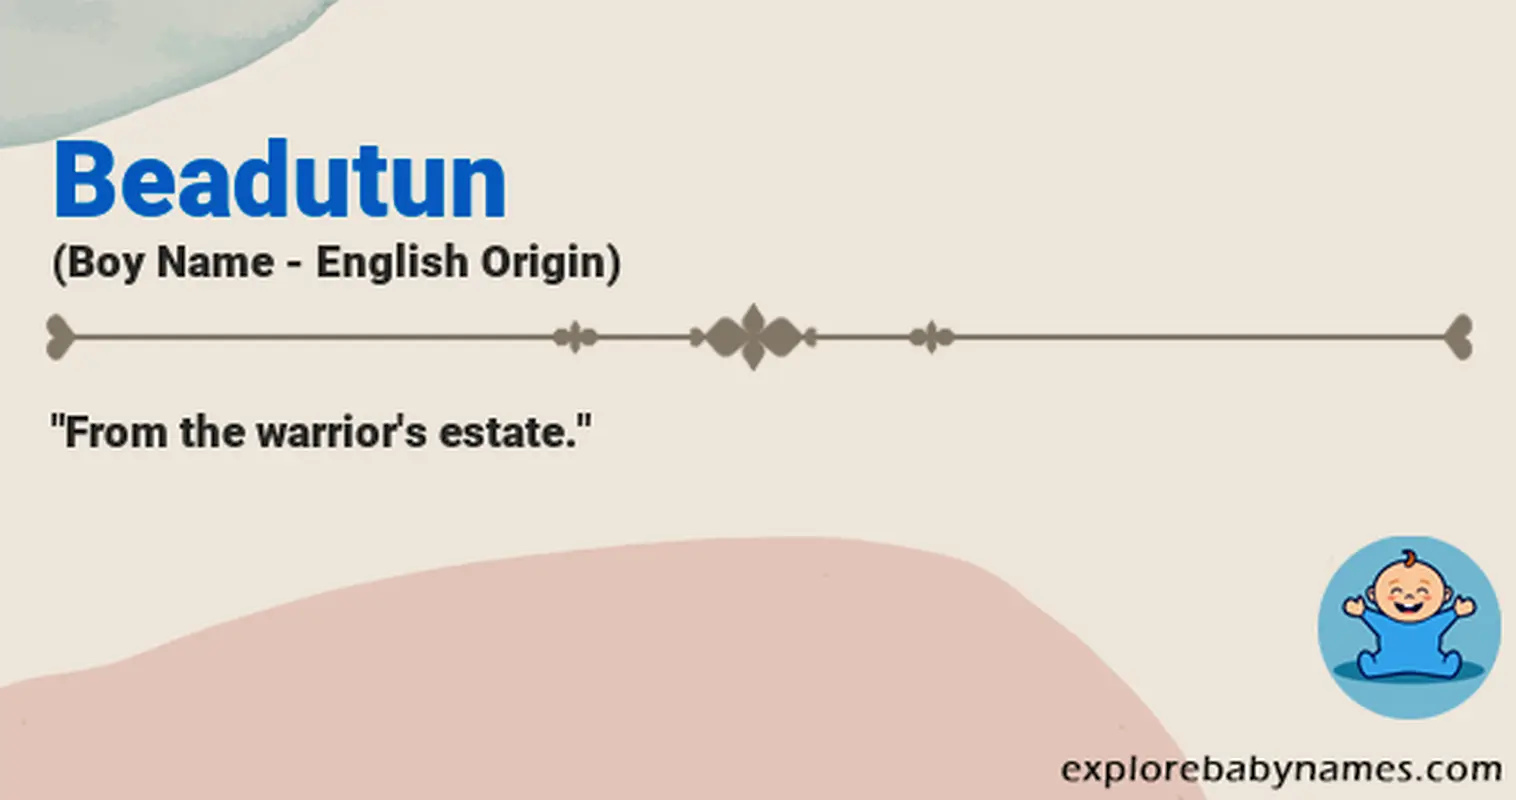 Meaning of Beadutun